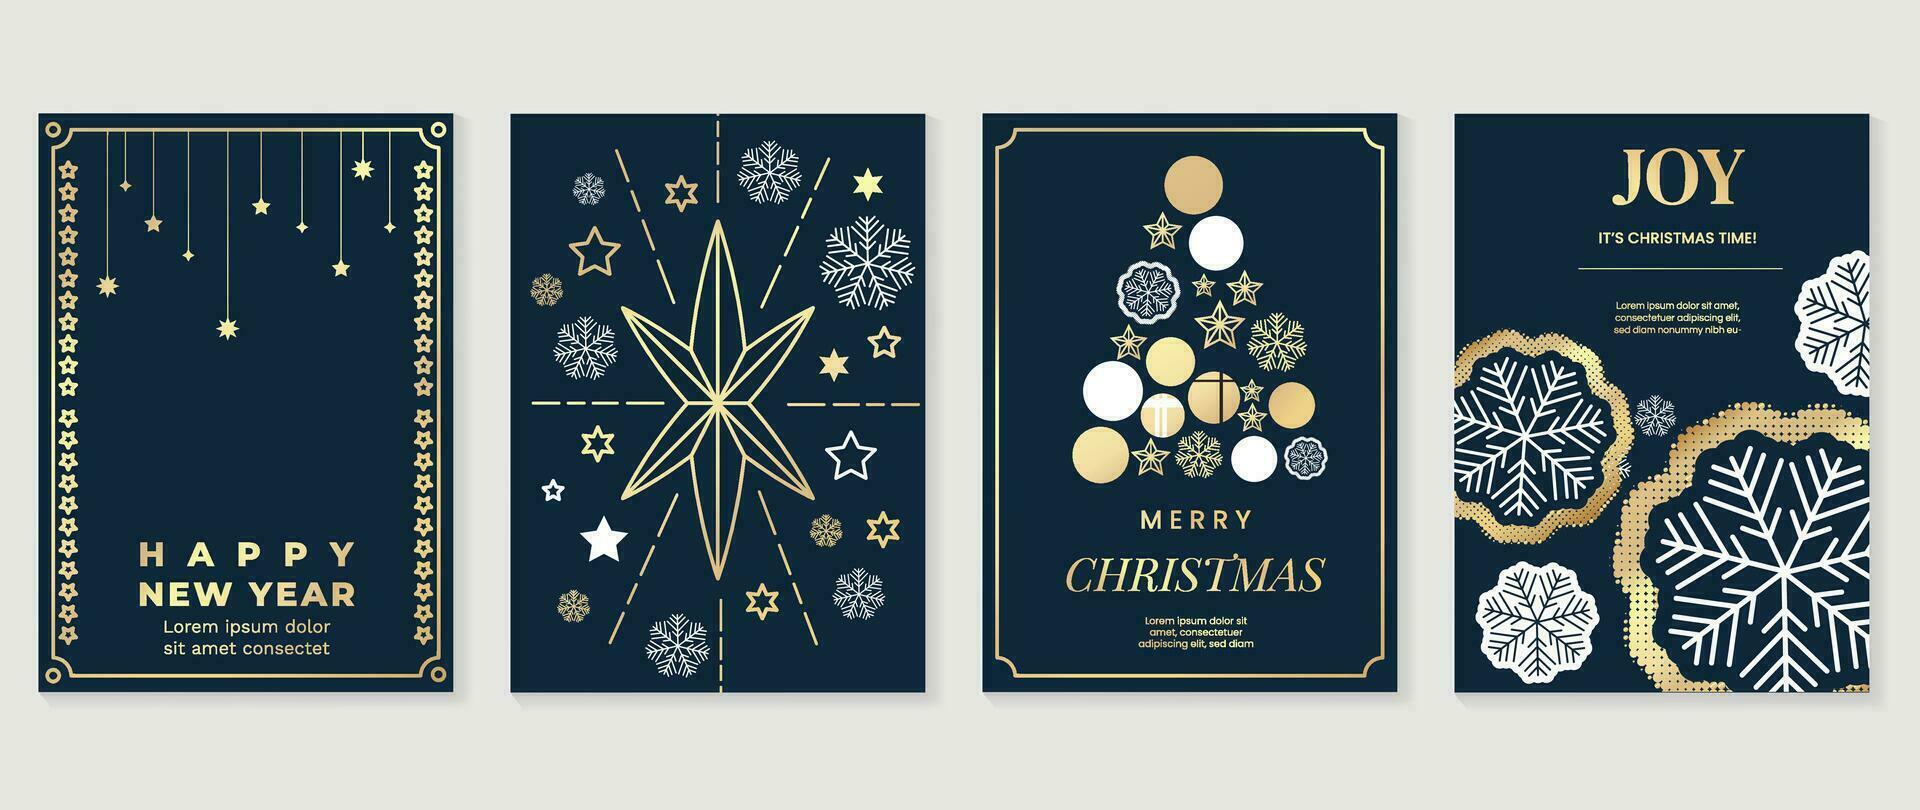 Luxury christmas invitation card art deco design vector. Snow, snowflake, christmas tree line art on dark blue background. Design illustration for cover, greeting card, print, poster, wallpaper. vector